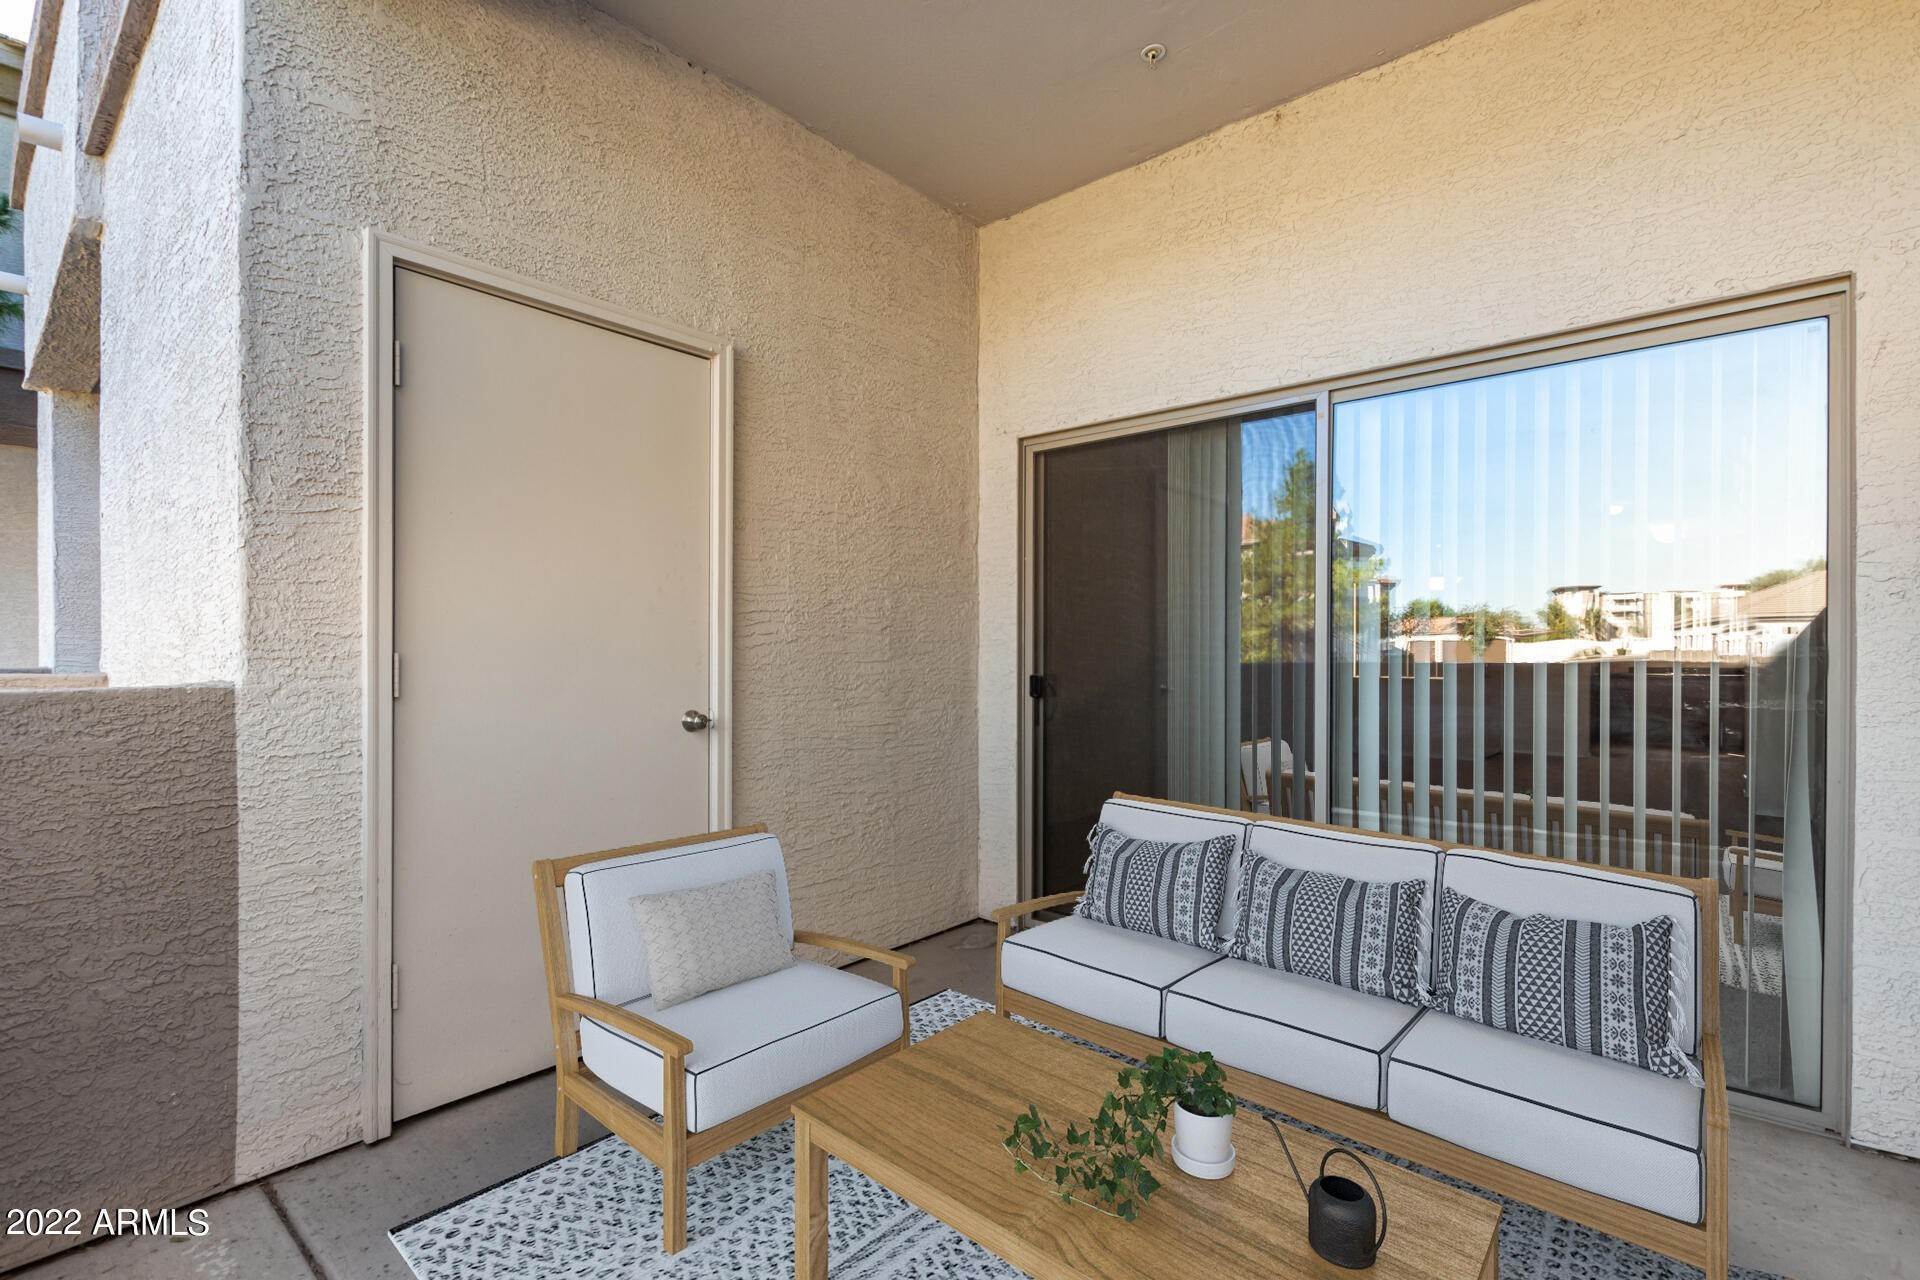 3. Apartment for Sale at Mesa, AZ 85206